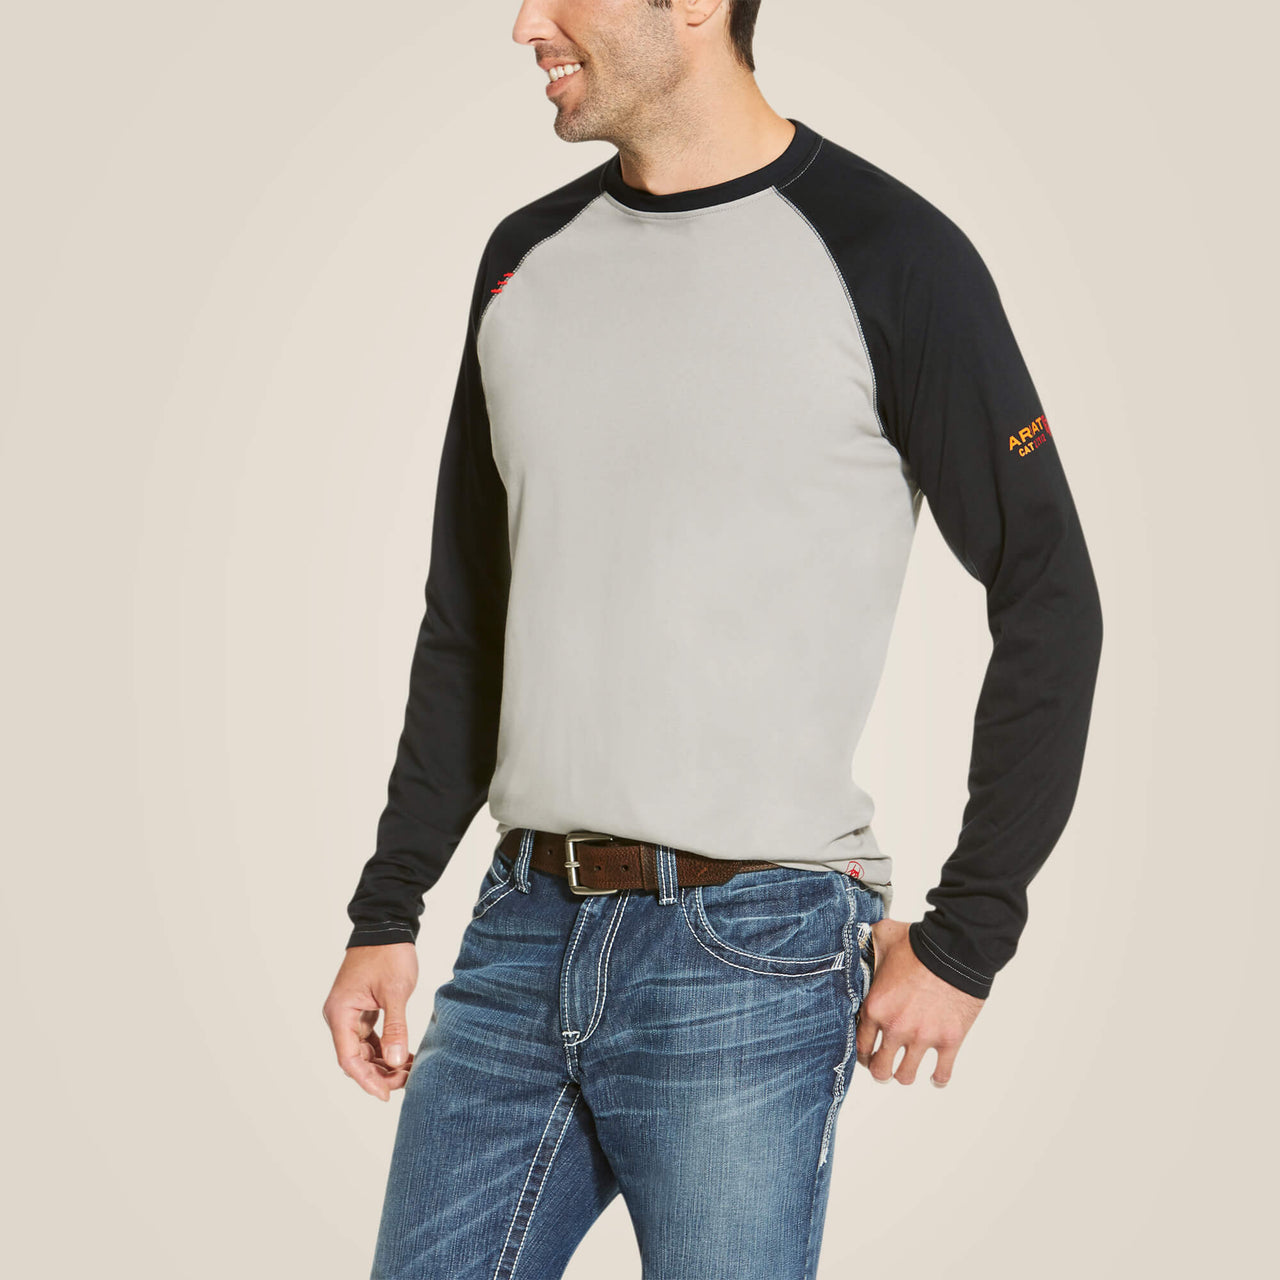 Ariat Men's Fire Resistant Baseball Long Sleeve Shirt - Grey/Black